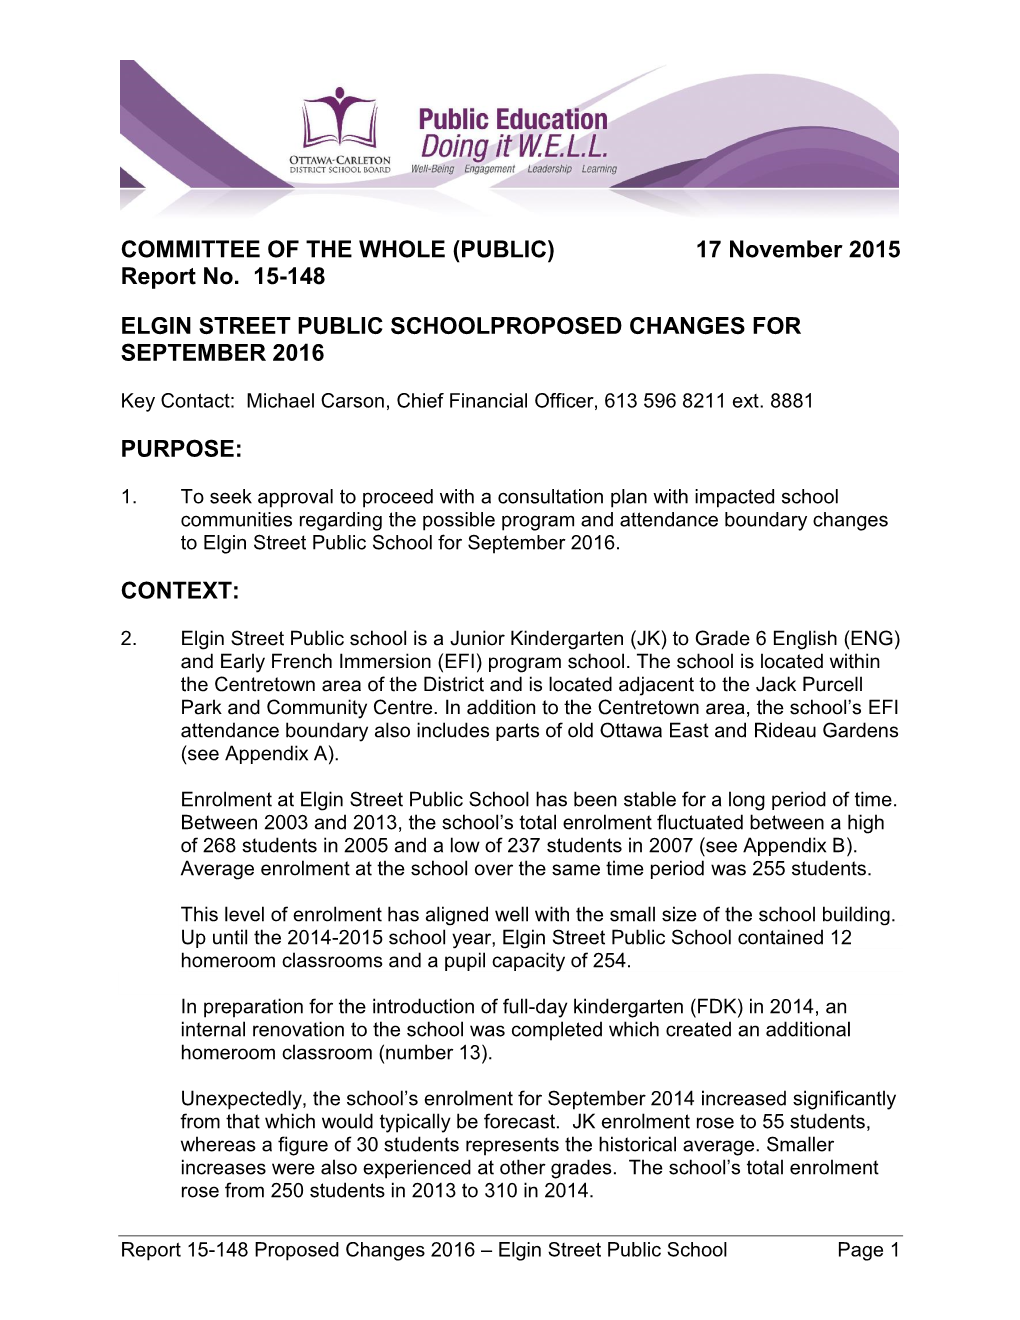 Elgin Street Public Schoolproposed Changes for September 2016